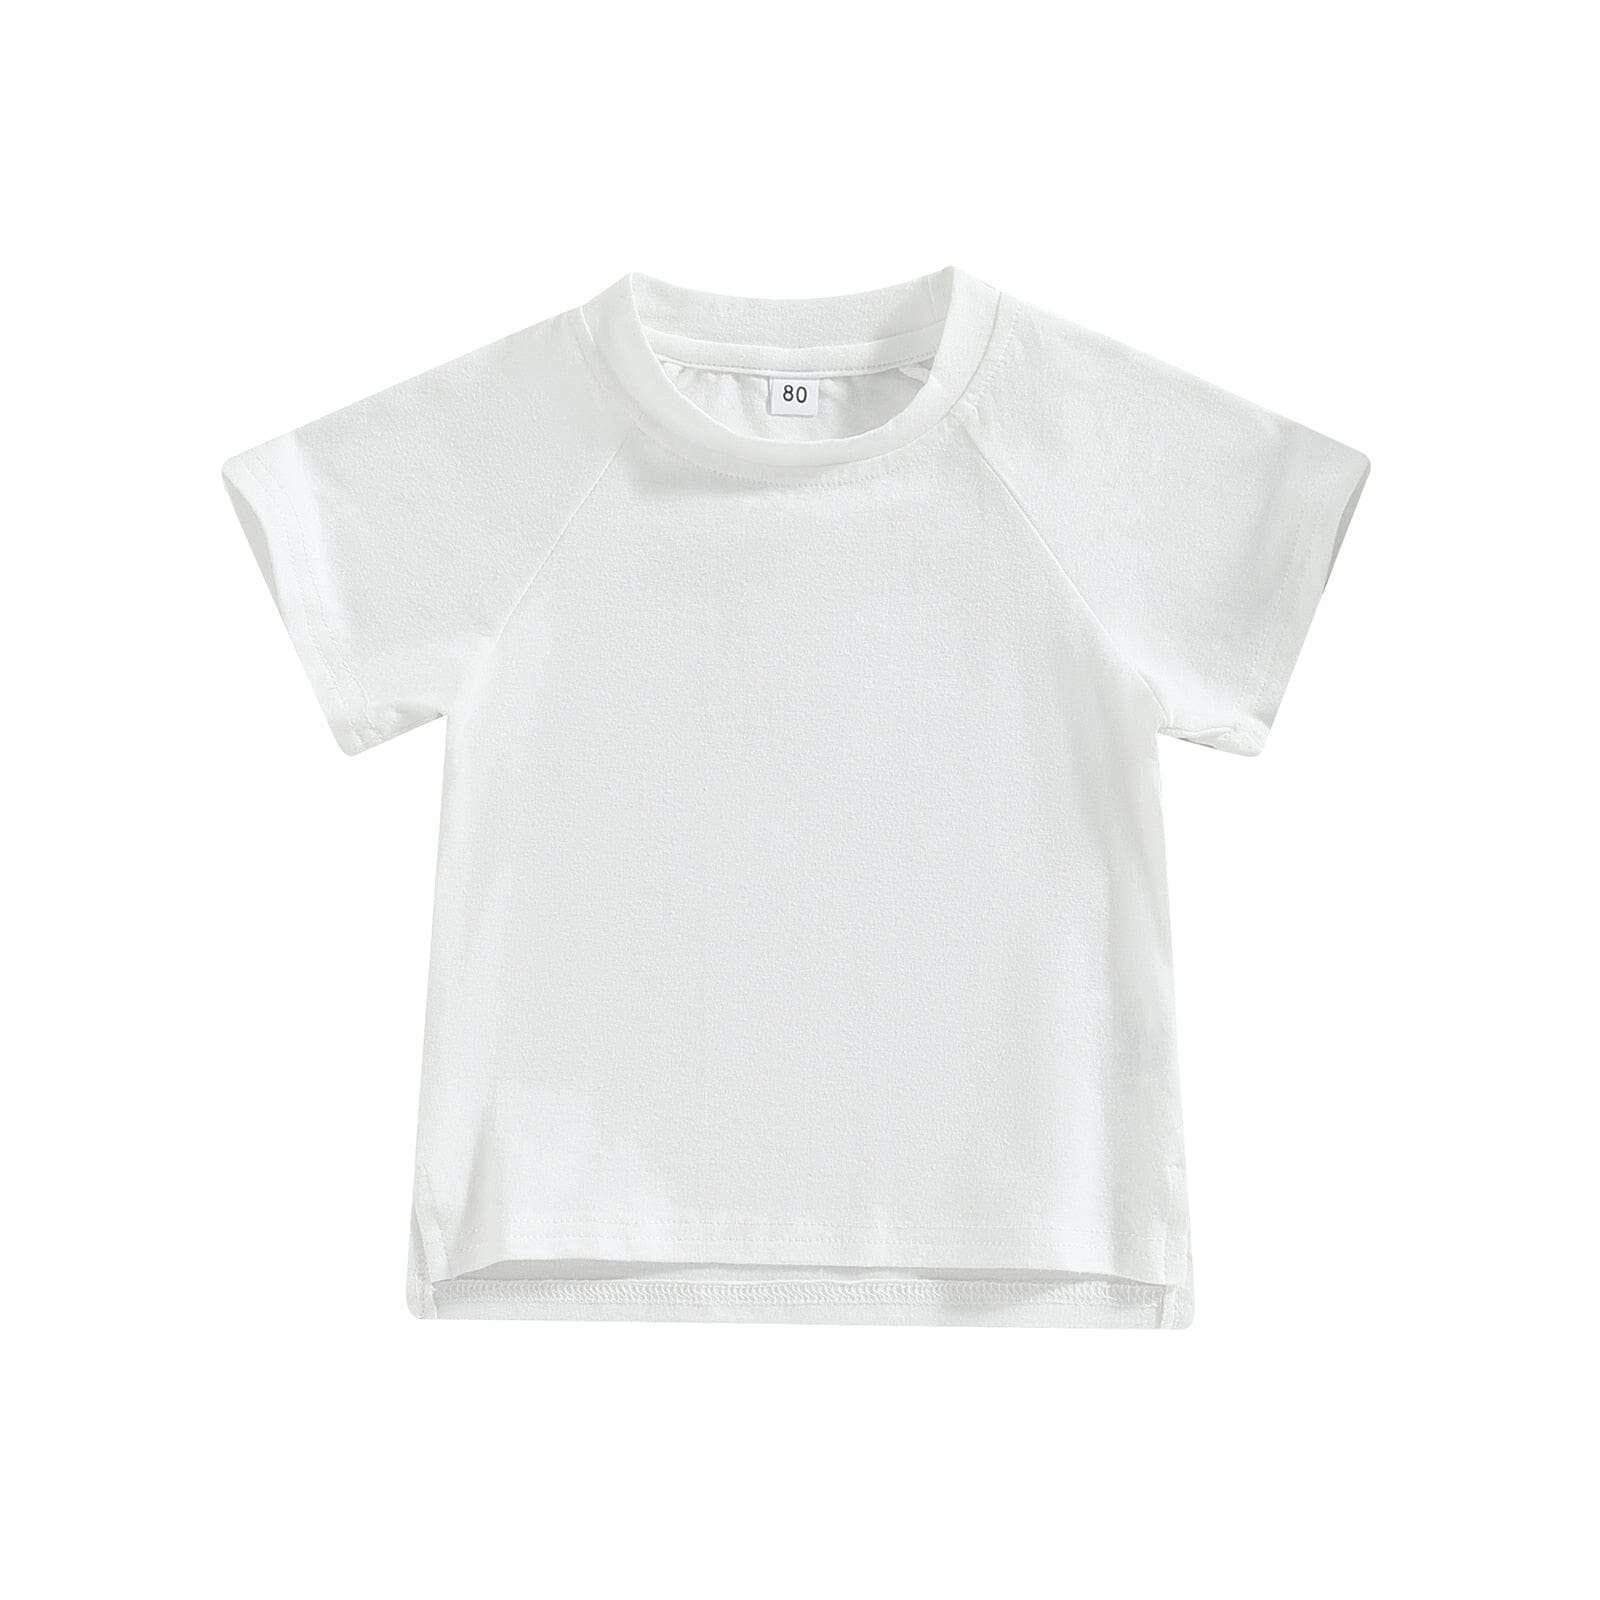 Camiseta Infantil Minimalista Loja Click Certo Branco 2-3 Anos 